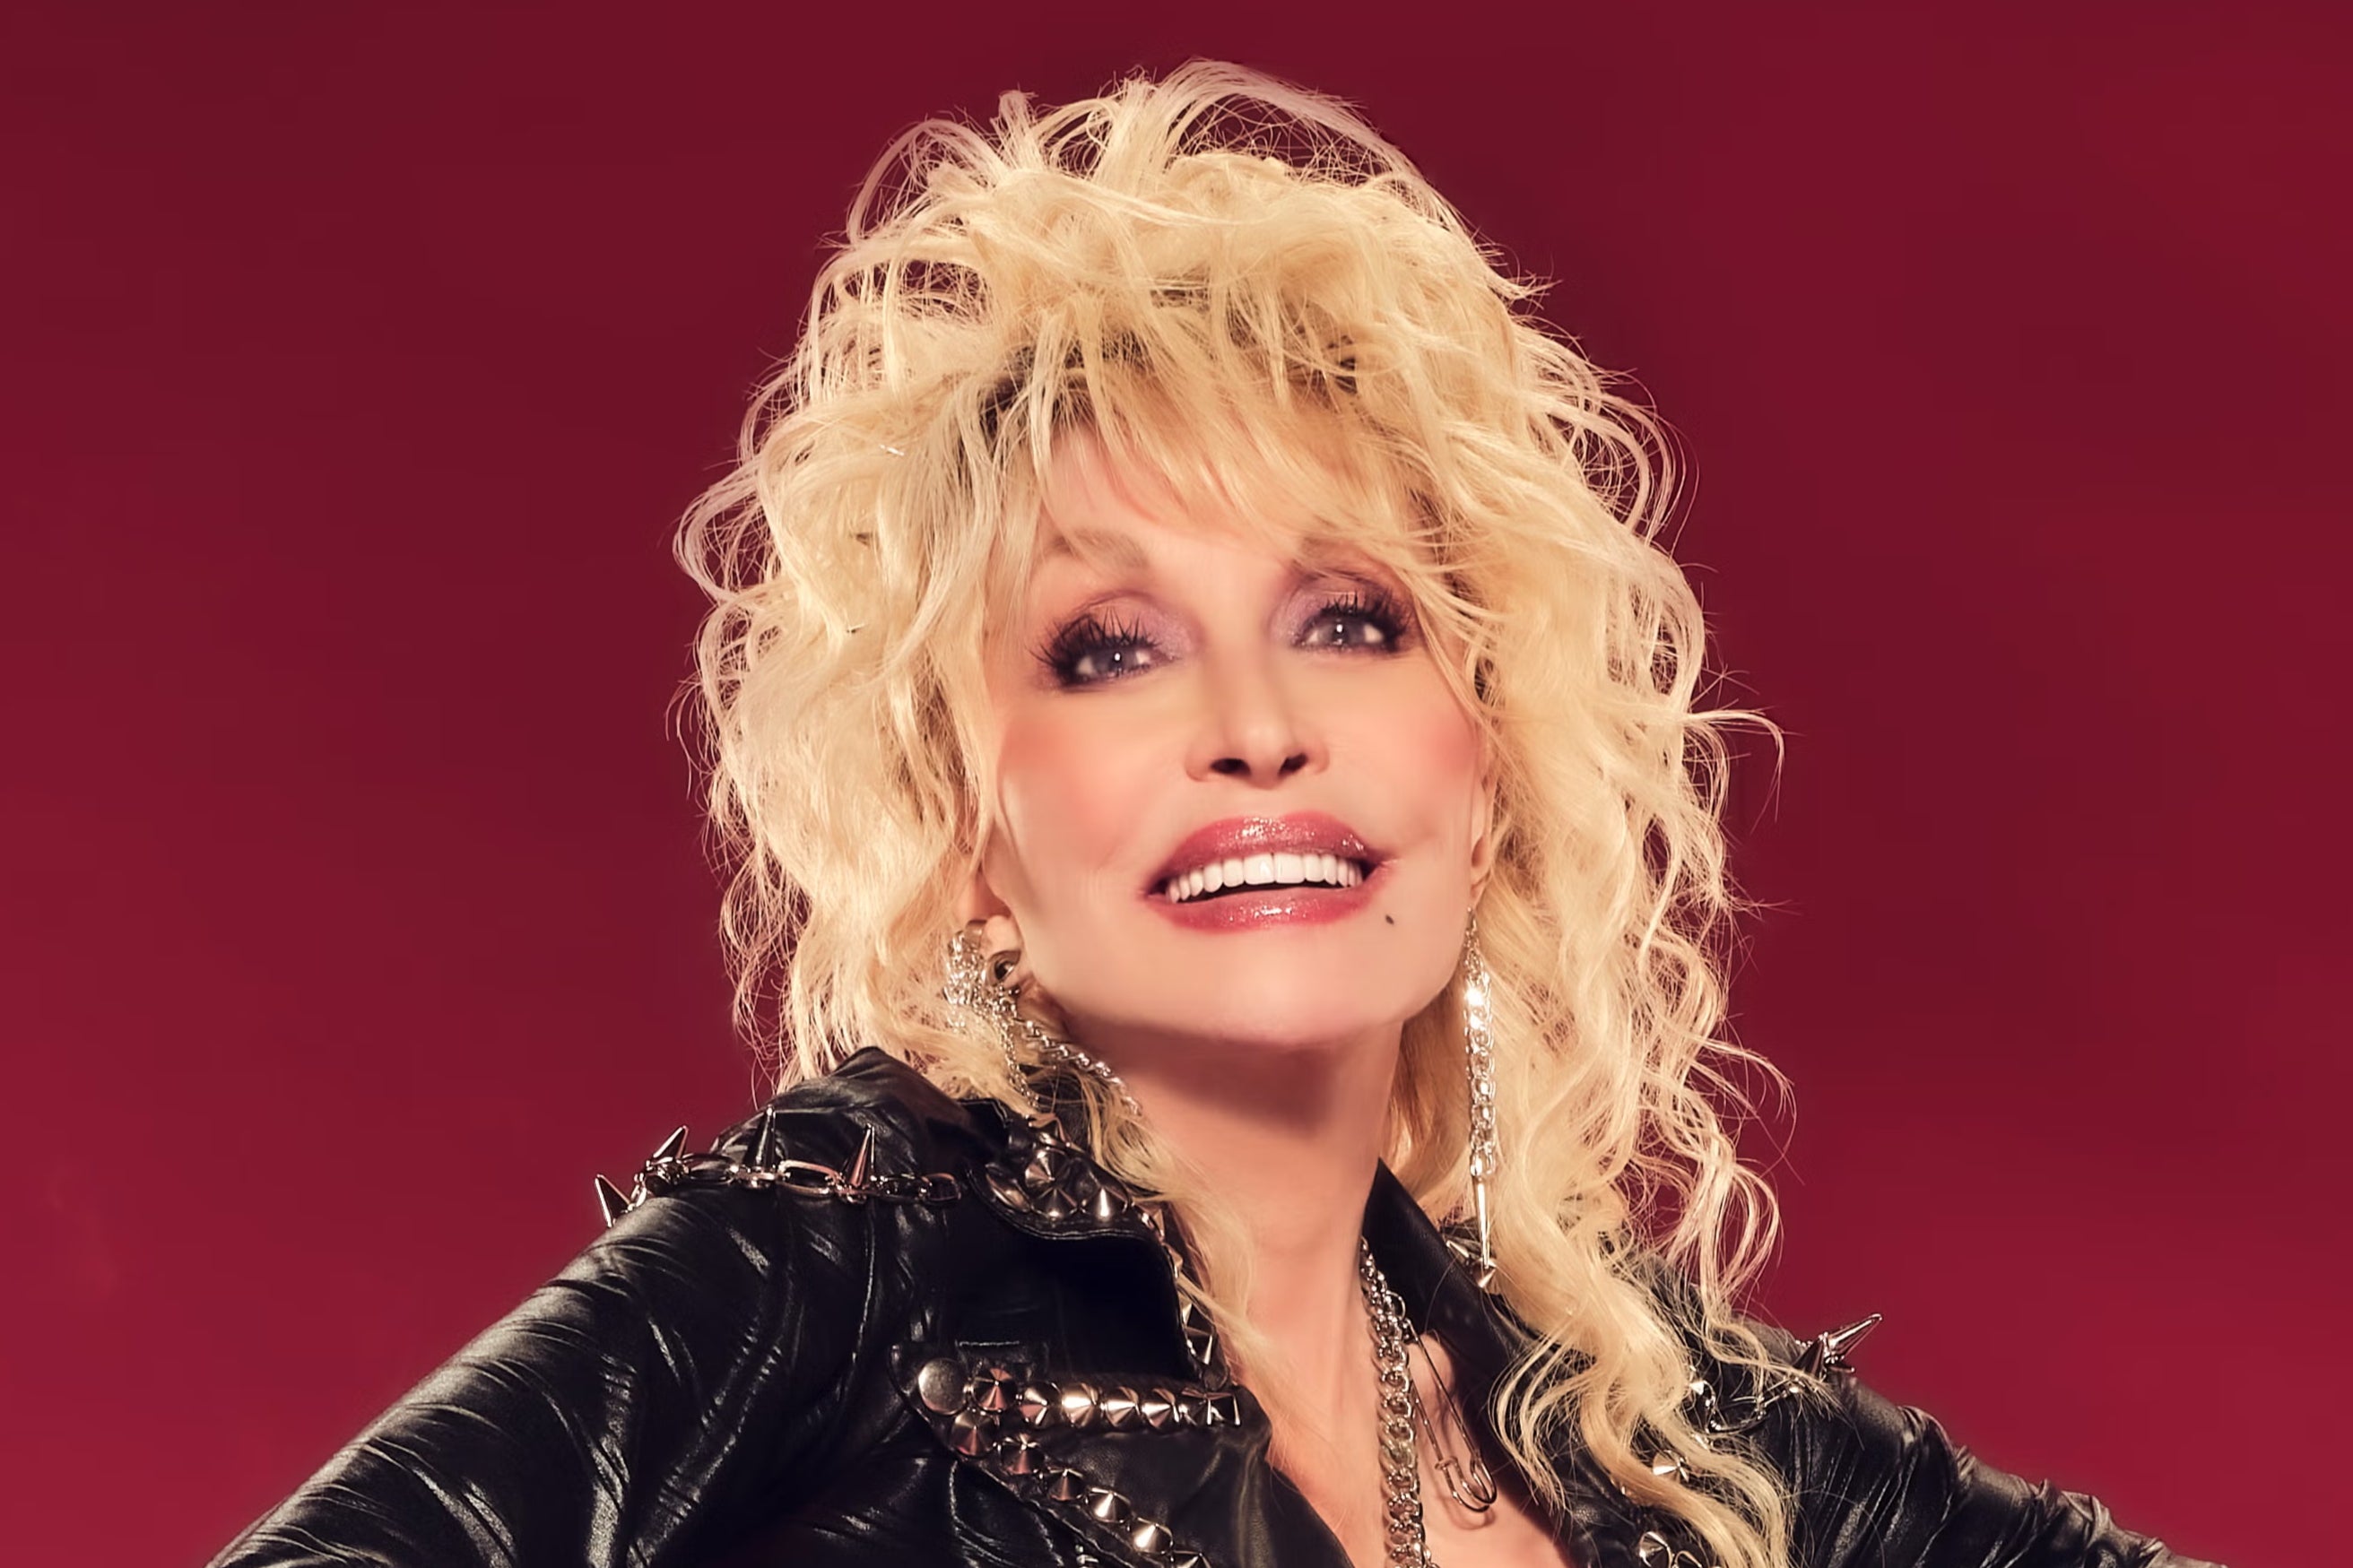 Dolly Parton on family, fashion and rock stardom: 'I have to be who I am,  so I fought for that and I still do